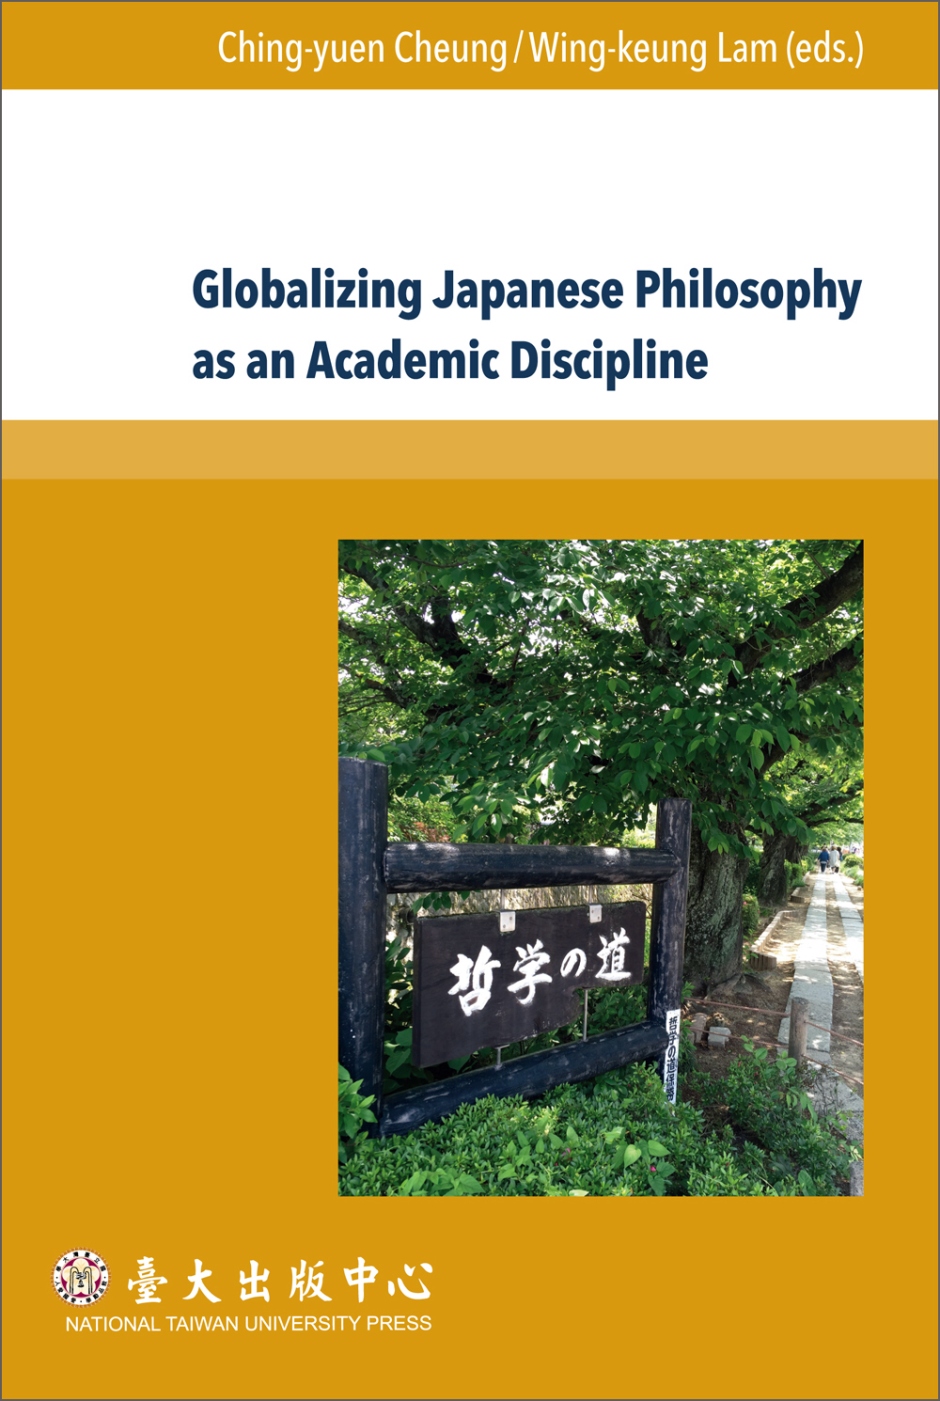 Globalizing Japanese Philosophy as an Academic Discipline